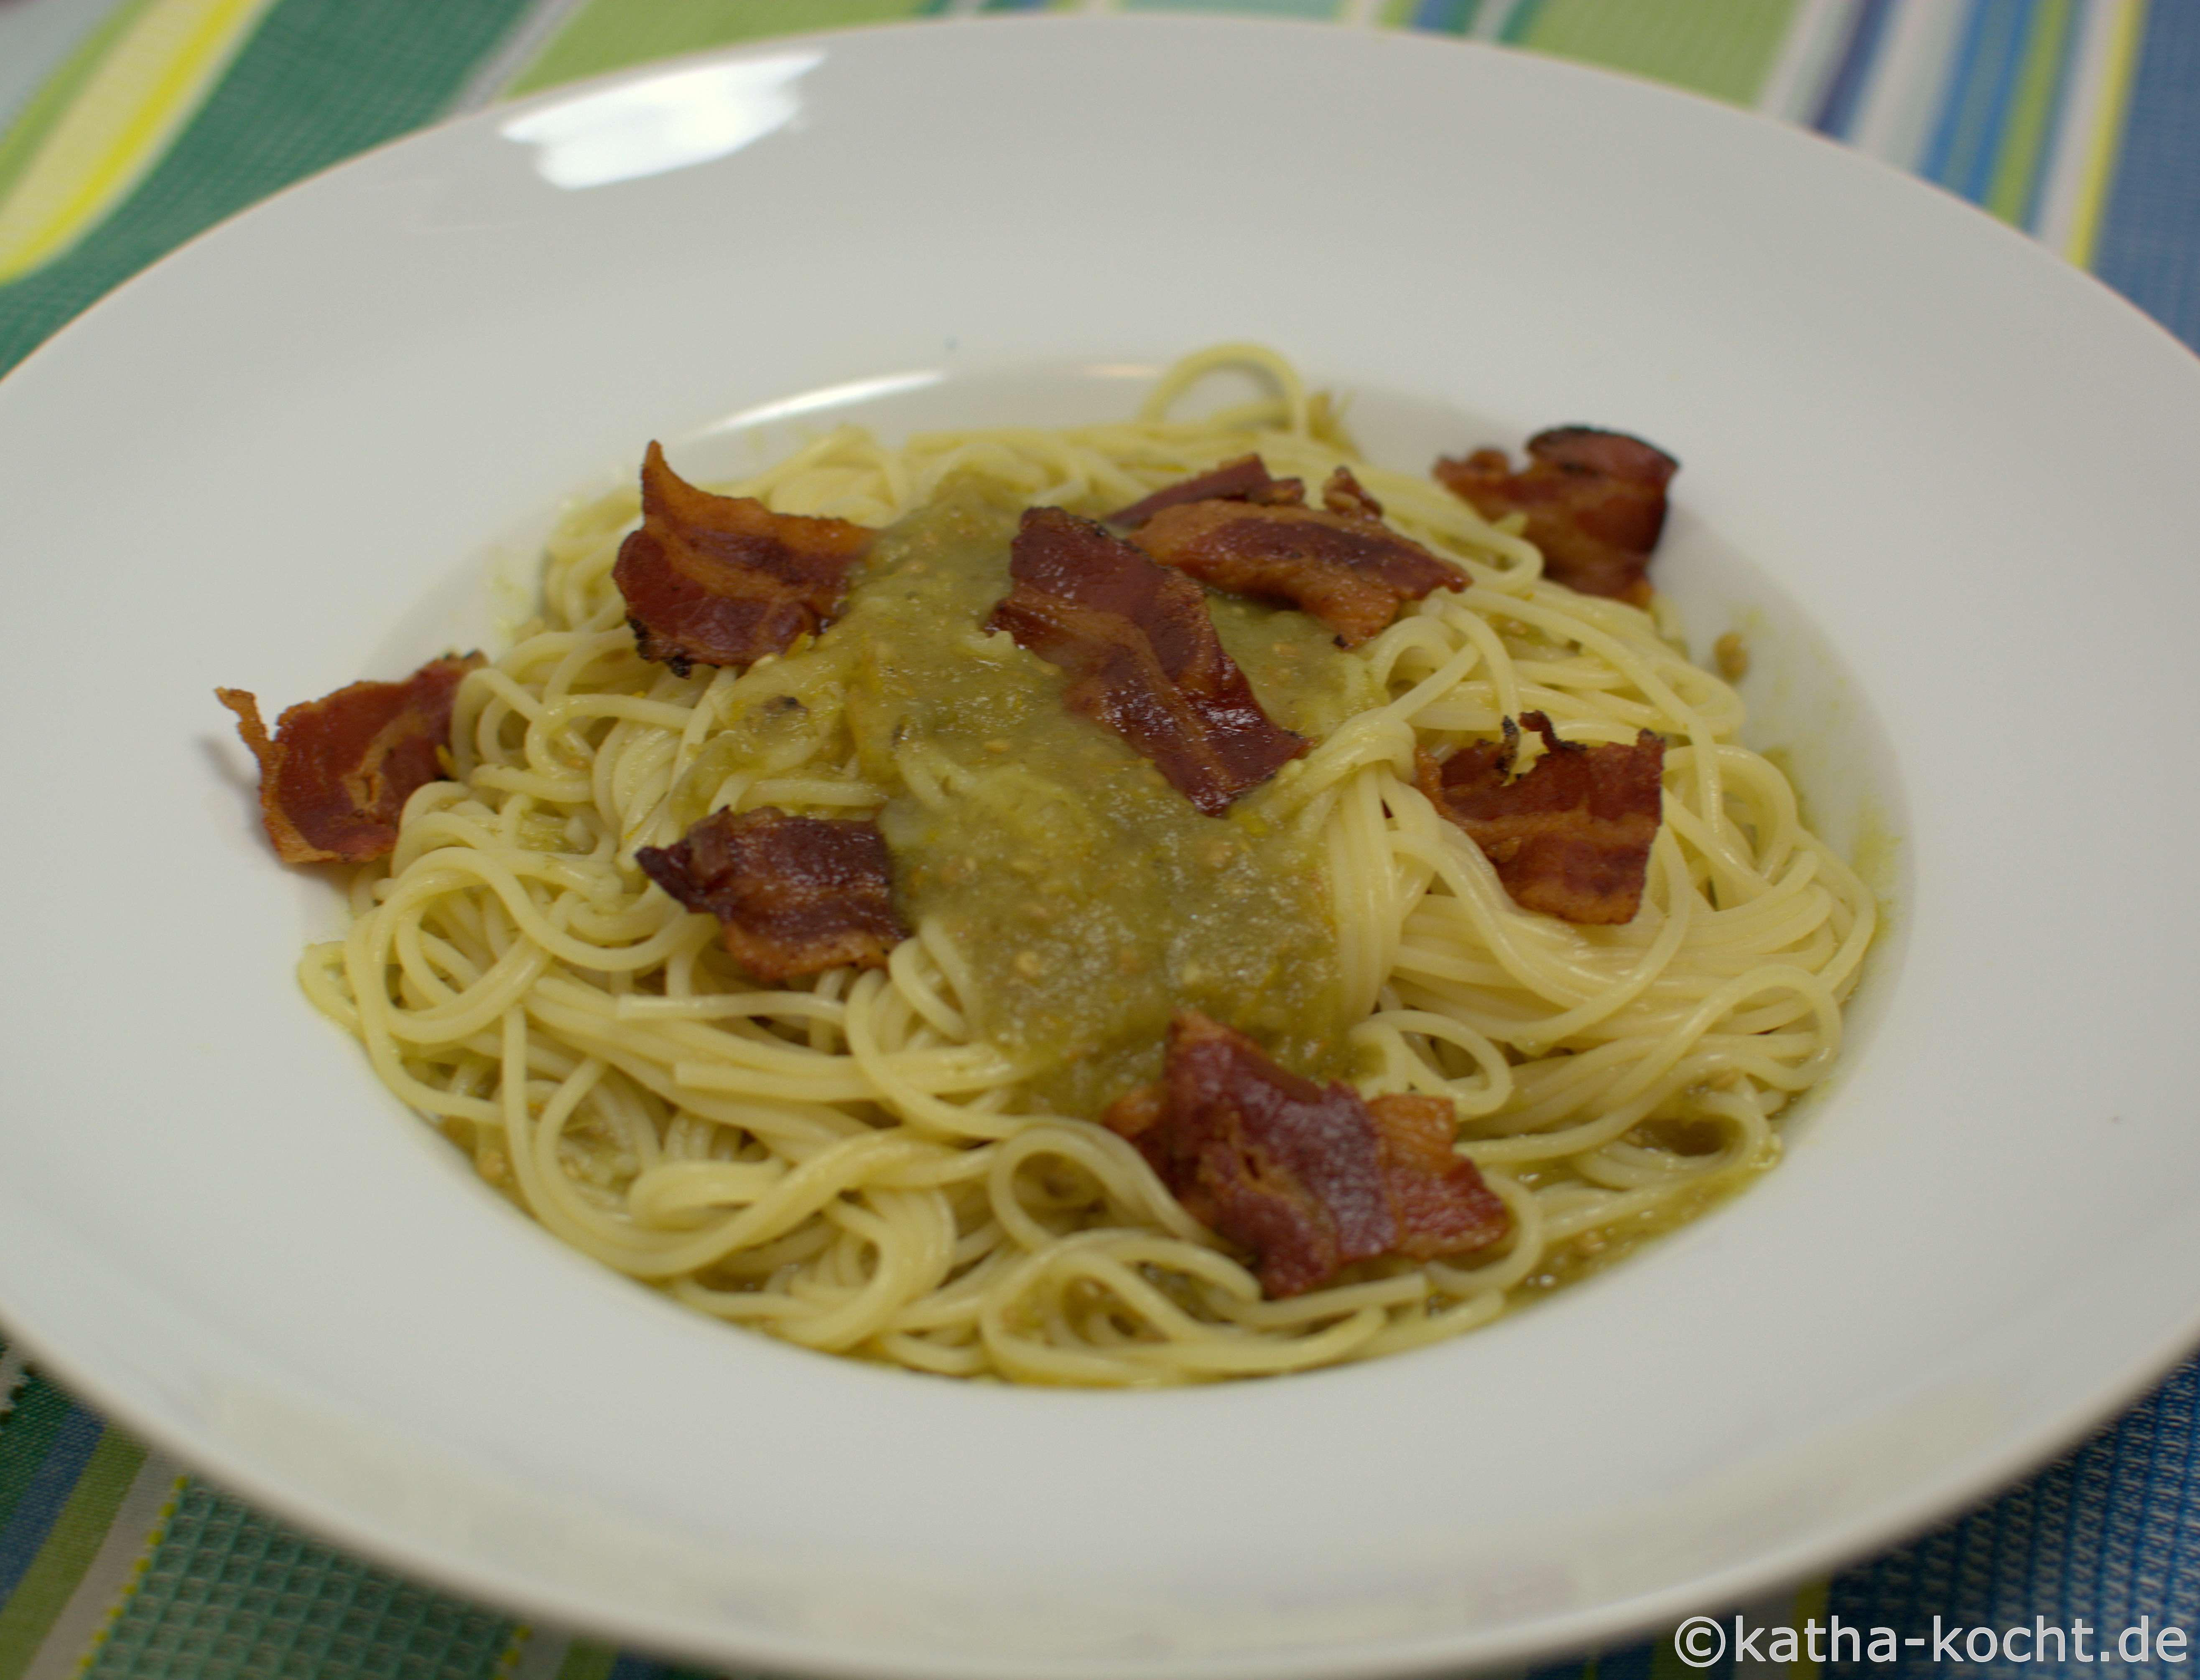 Spaghetti mit grüner Tomaten-Ingwer Sauce - Katha-kocht!